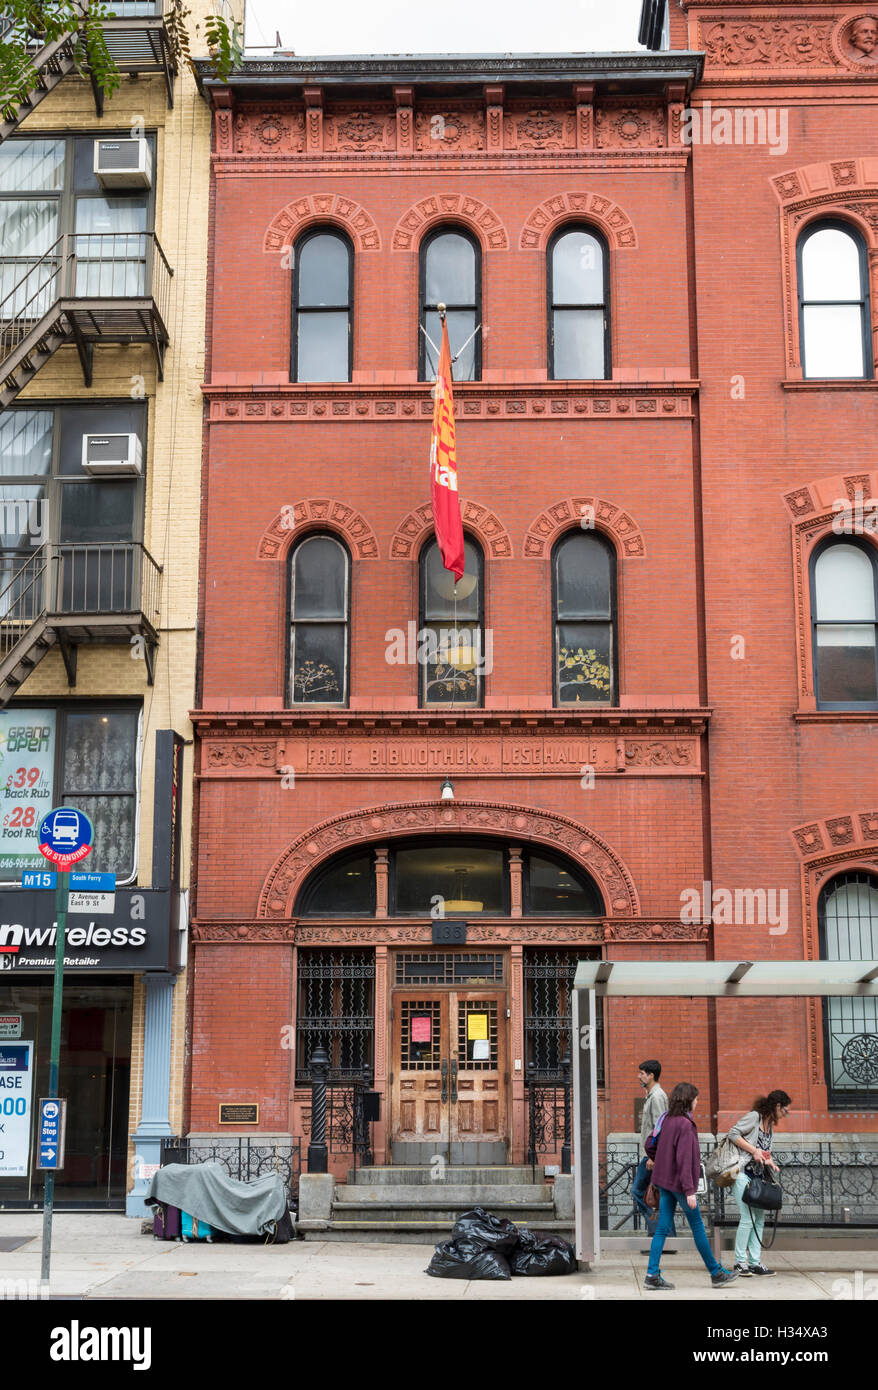 Freie Bibliothek und Lesehalle, now the Ottendorfer Public Library landmarked building in Lower East Side, New York Stock Photo